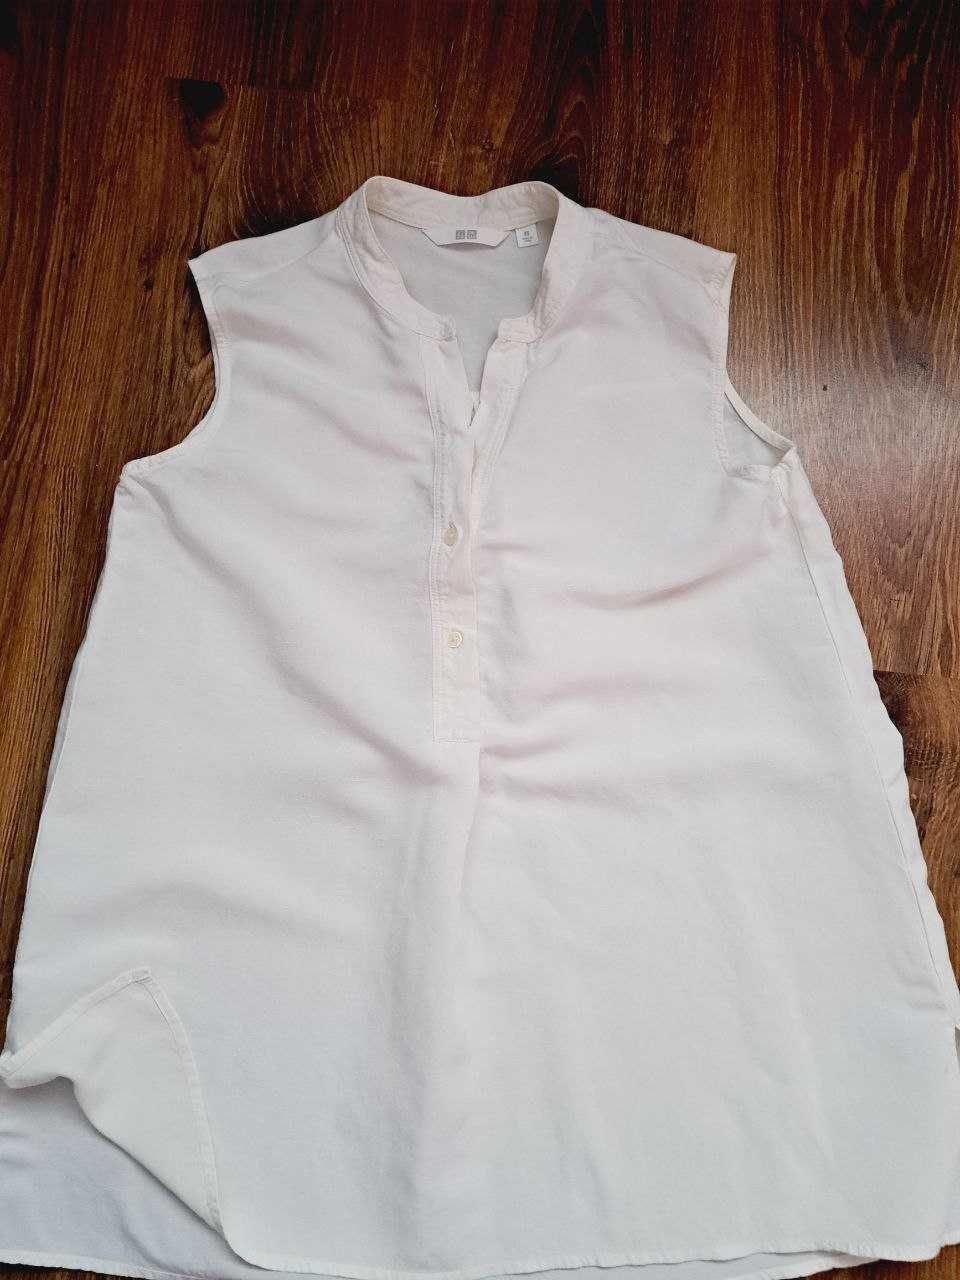 Белоснежная блуза UNIQLO без рукавов, размер XS-S.